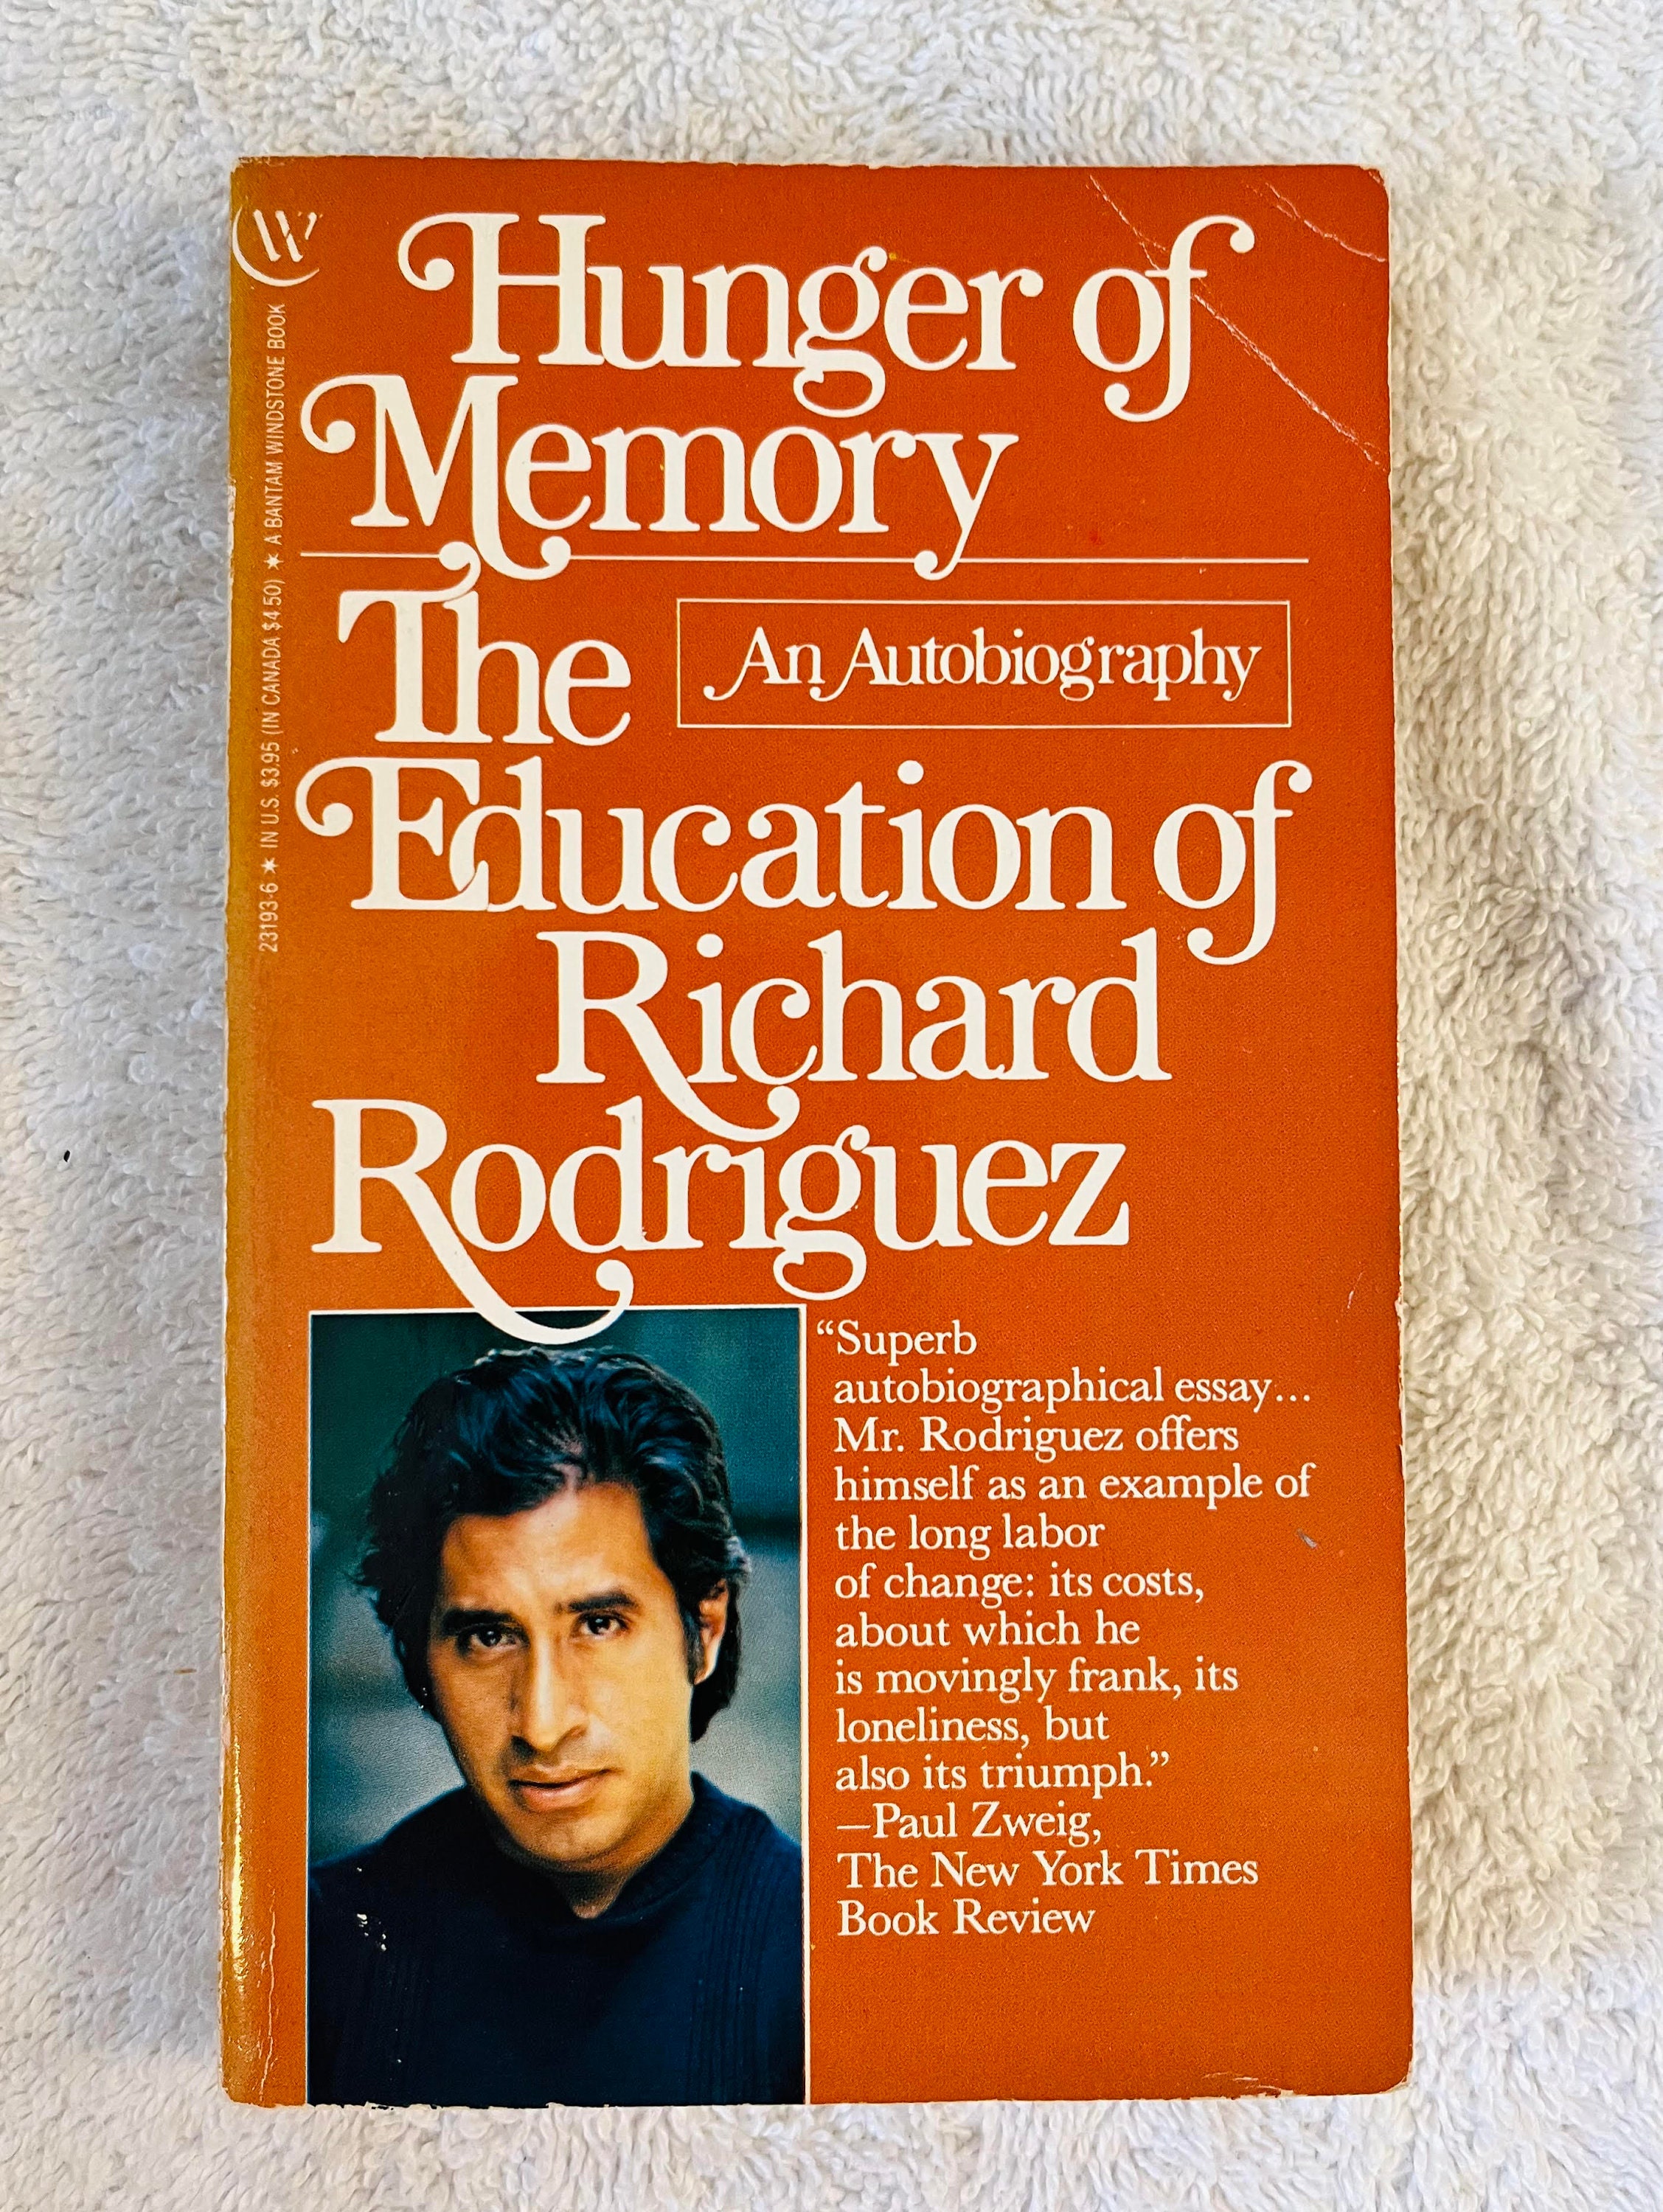 the education of richard rodriguez